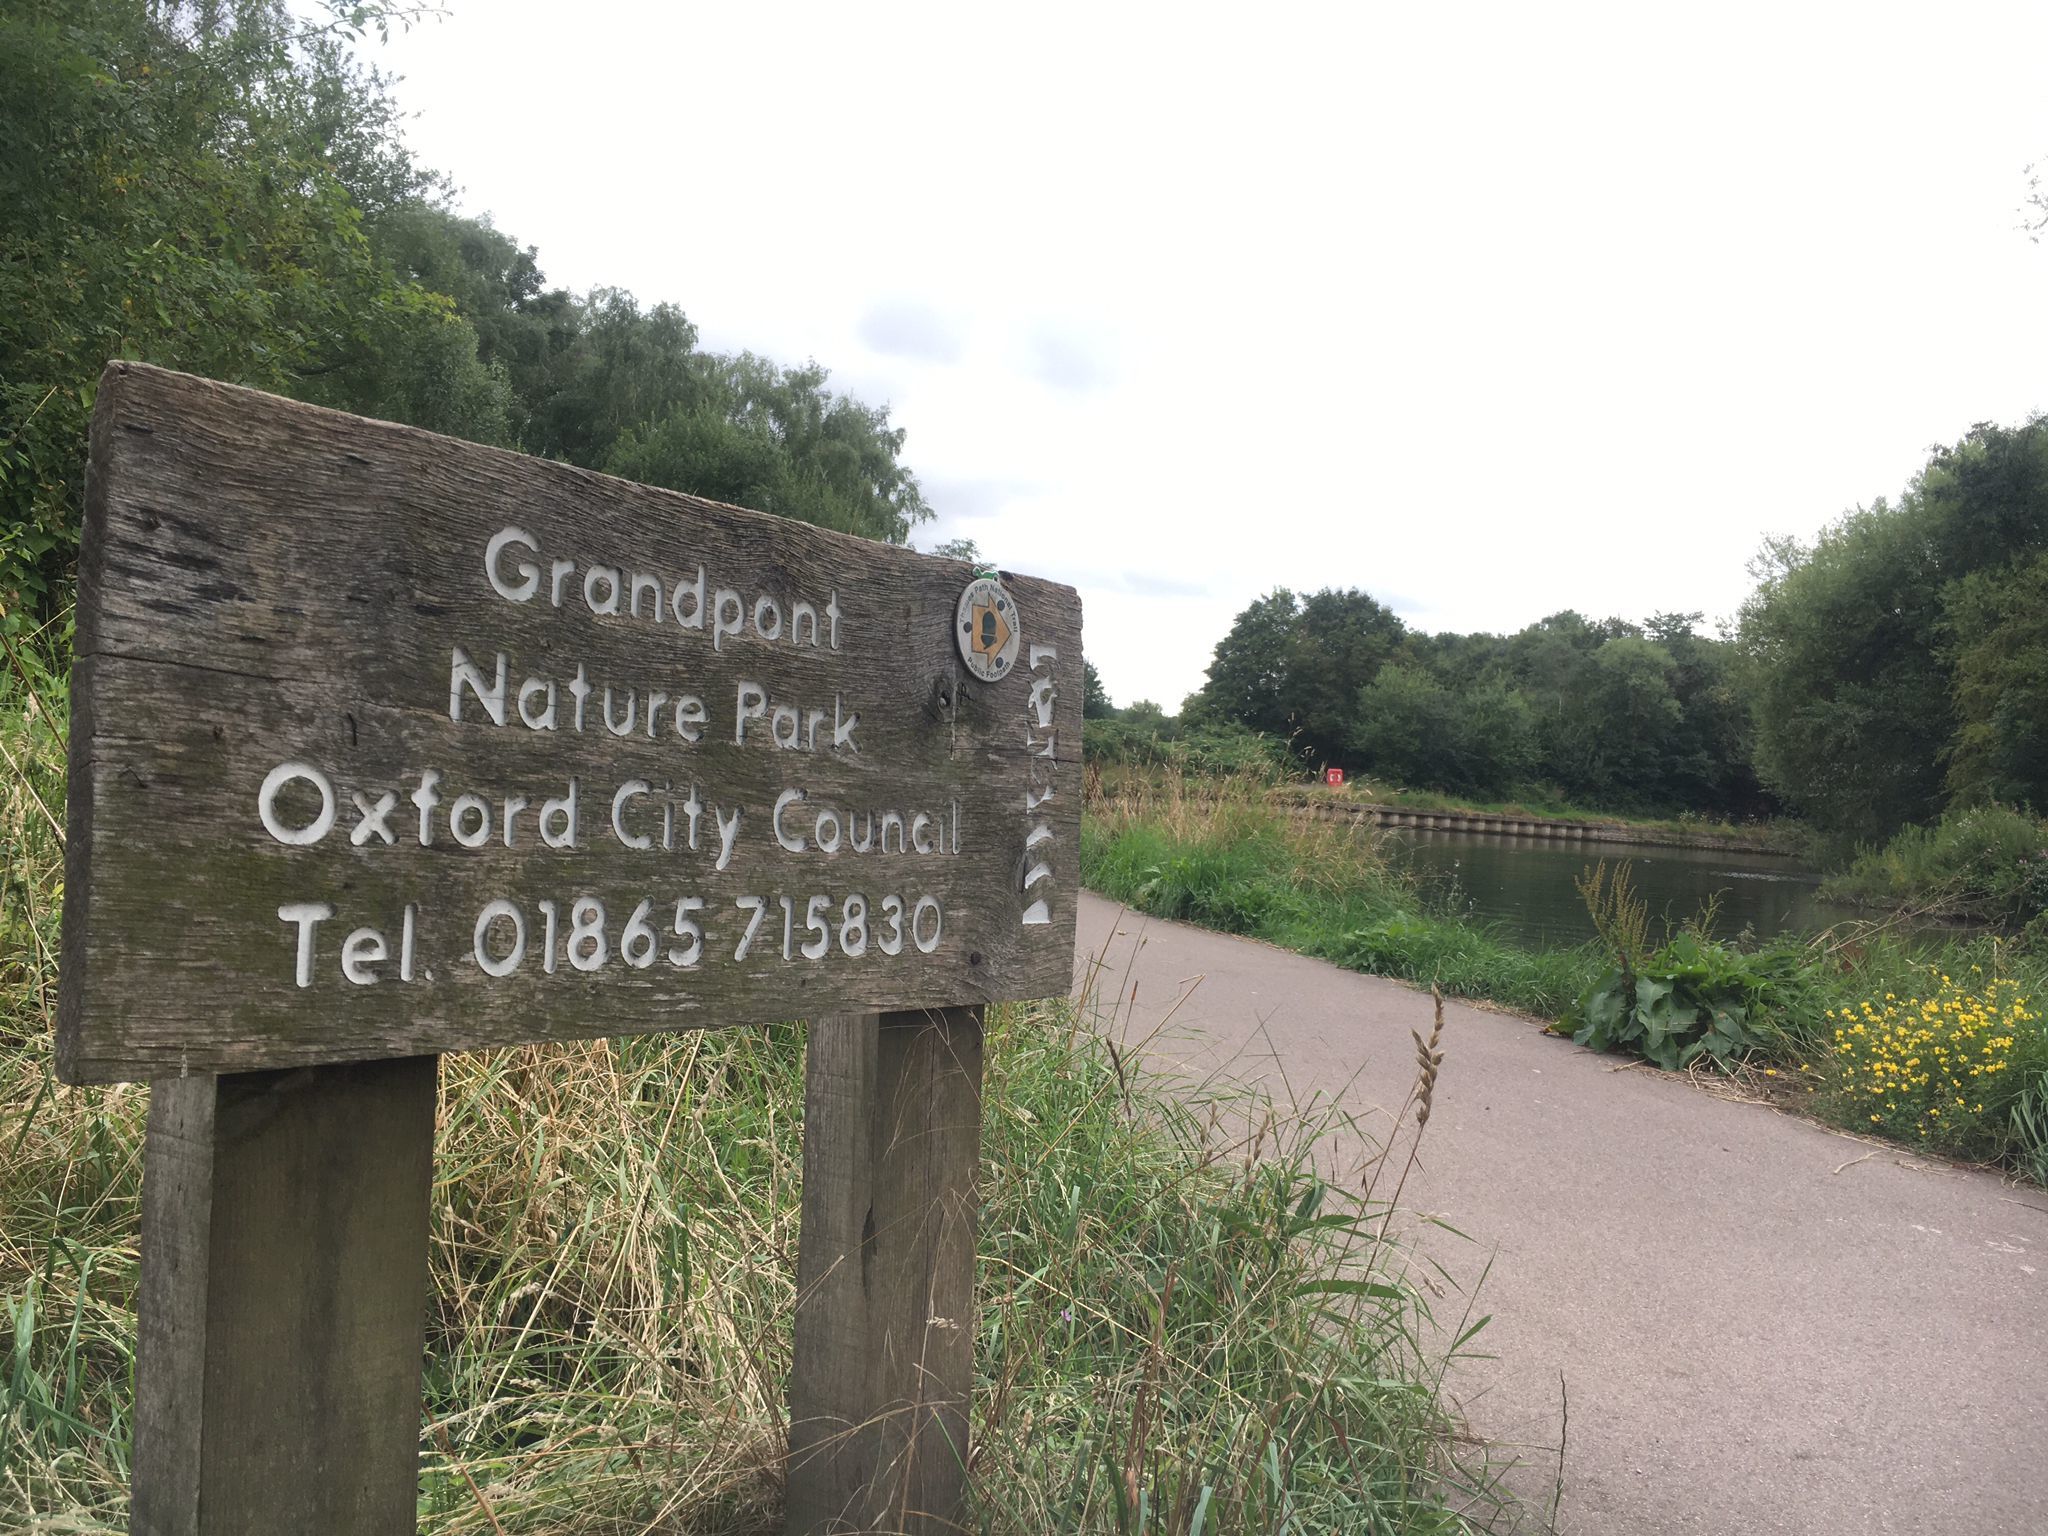 Grandpont nature park, Oxford, where the assault took place